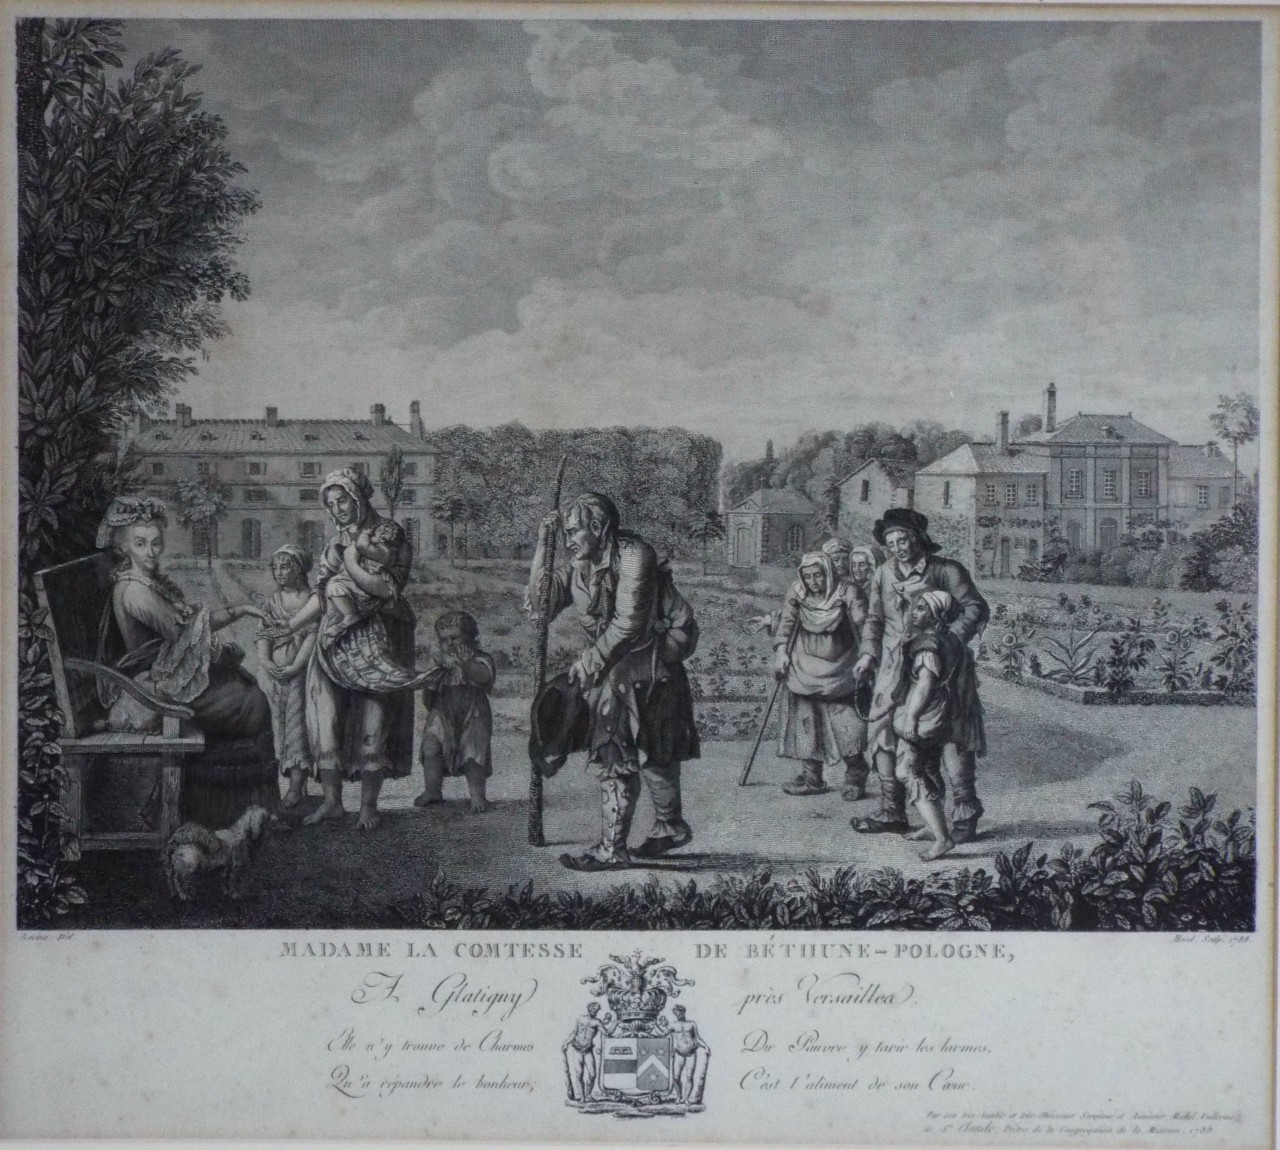 Print - Madame la Comtesse de Béthune-Pologne, A Glatigny pres Versailles. - 